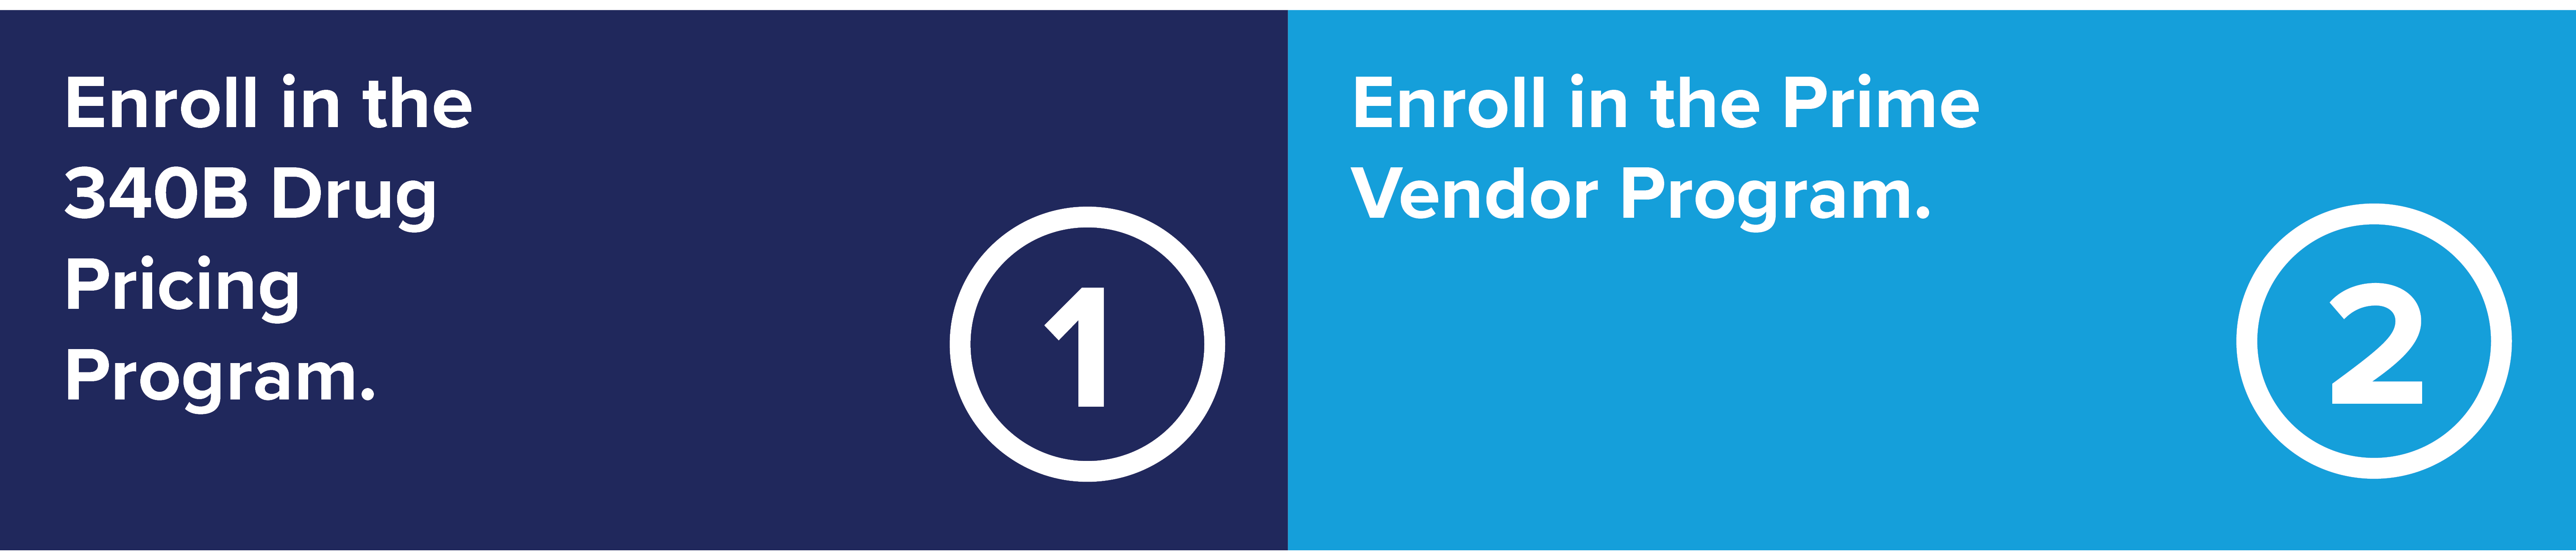 Step 1: Enroll in the 340B Drug Pricing Program. Step 2: Enroll in the 340B Prime Vendor Program